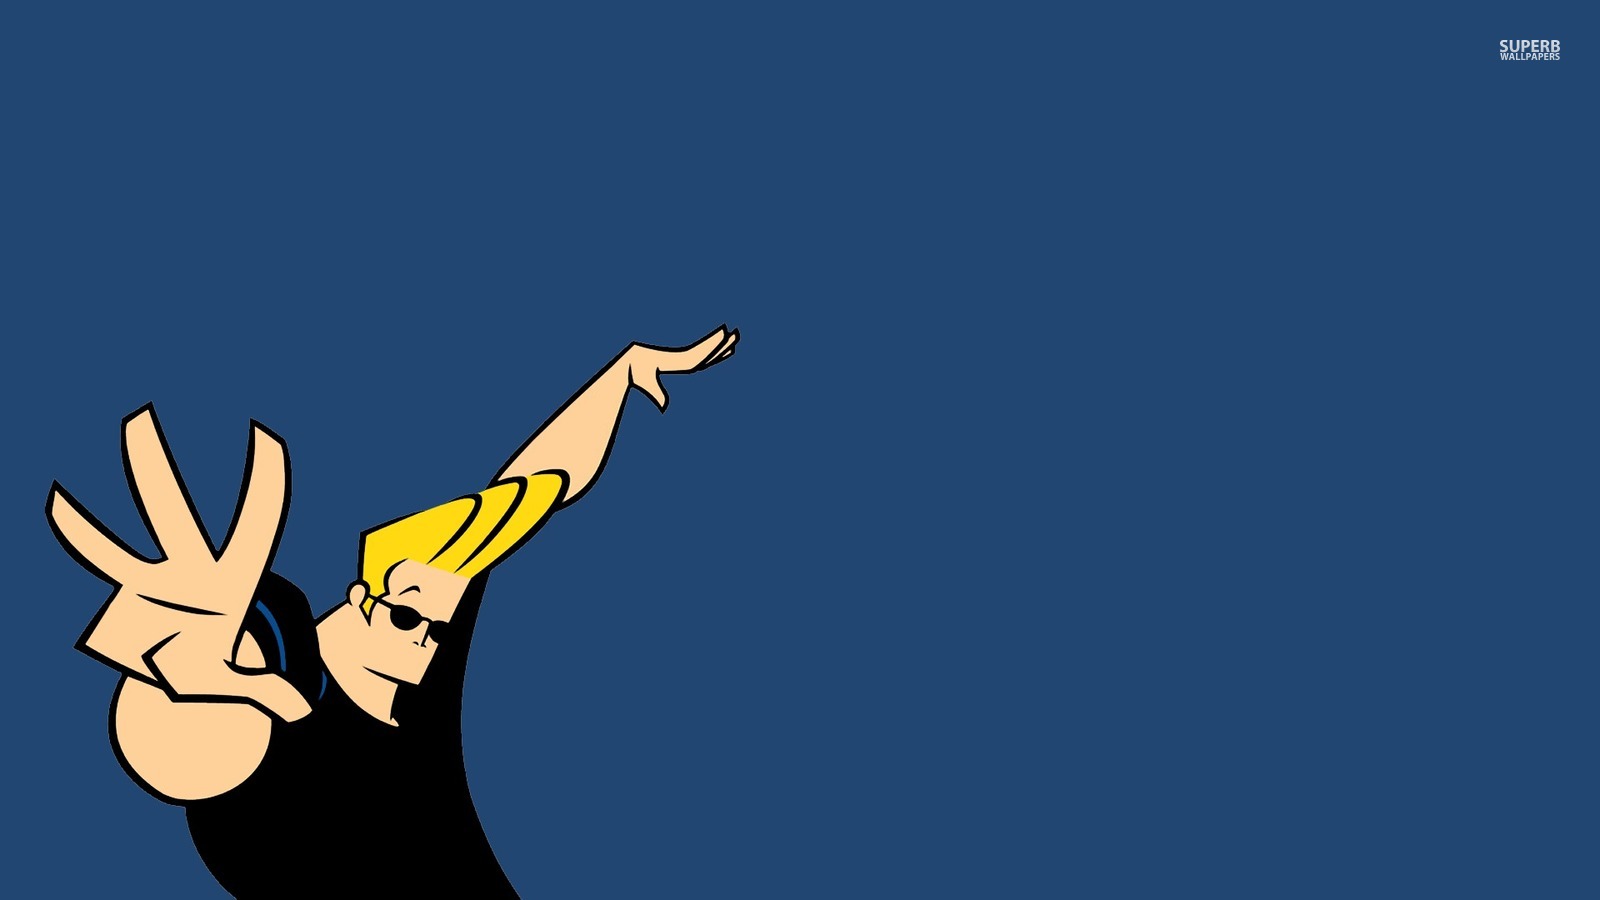 Johnny Bravo - Cartoon Network Wallpaper (38680237) - Fanpop